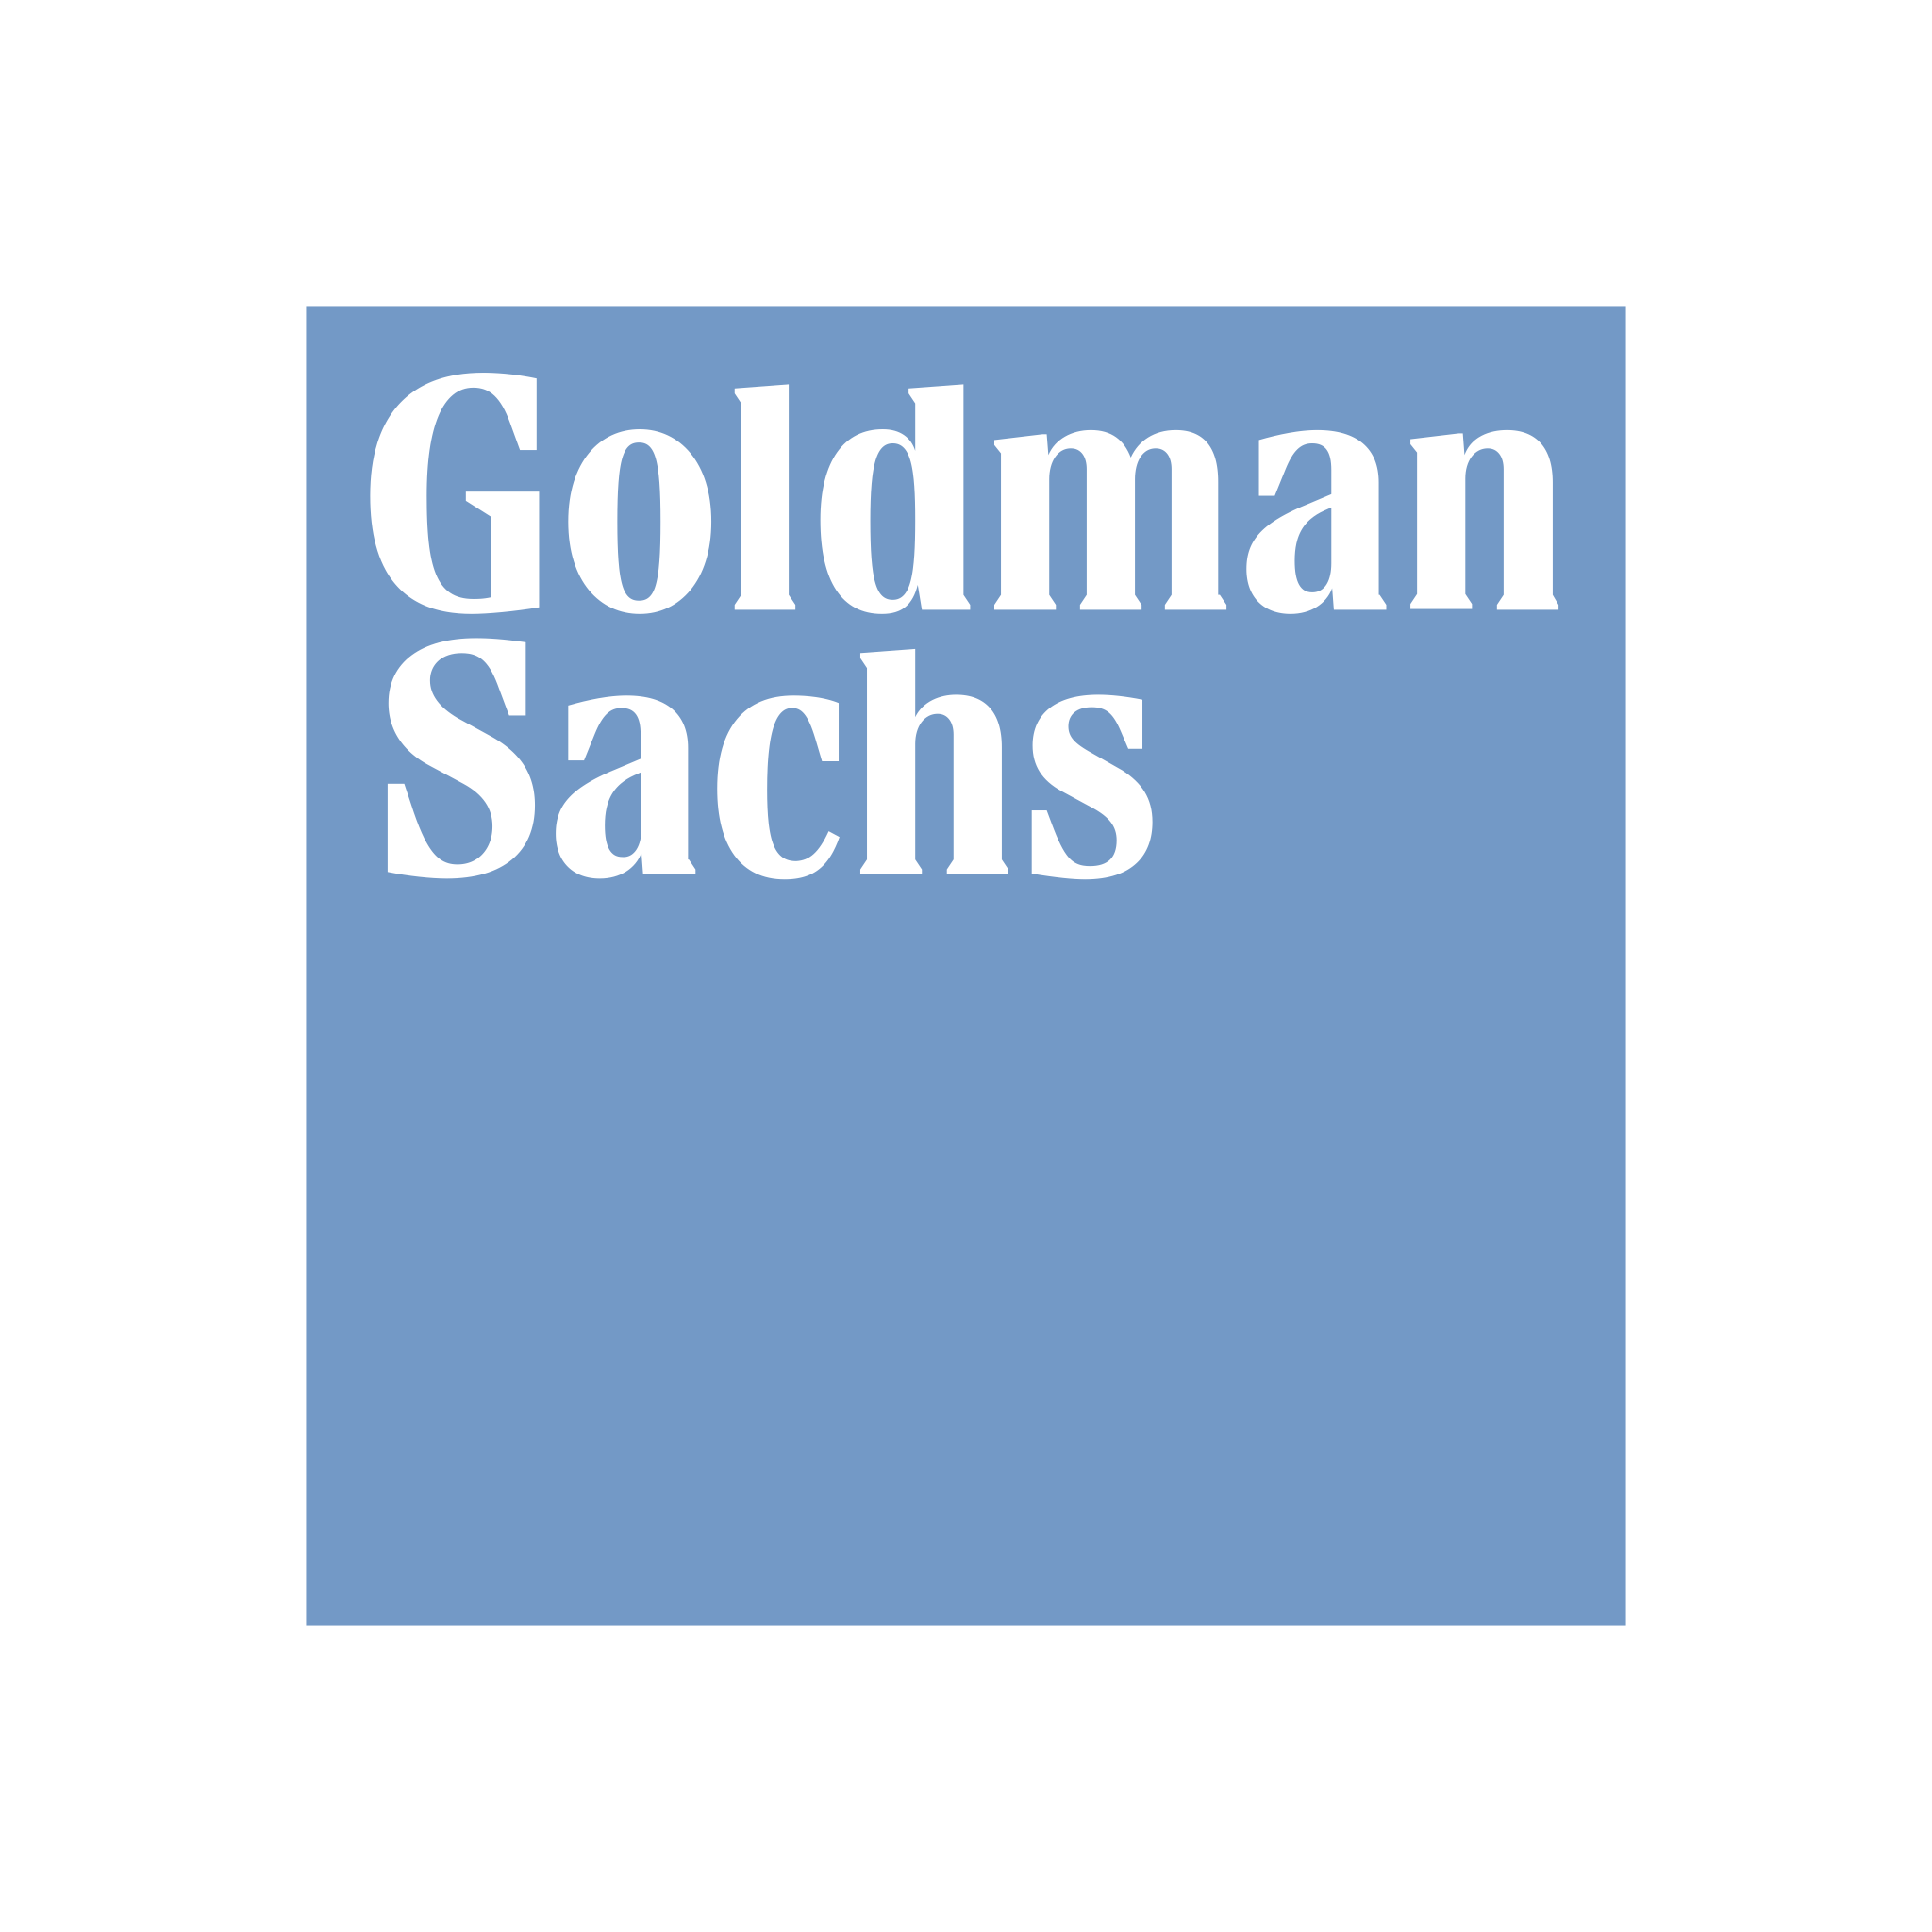 Goldman Sachs Logo PNG HD